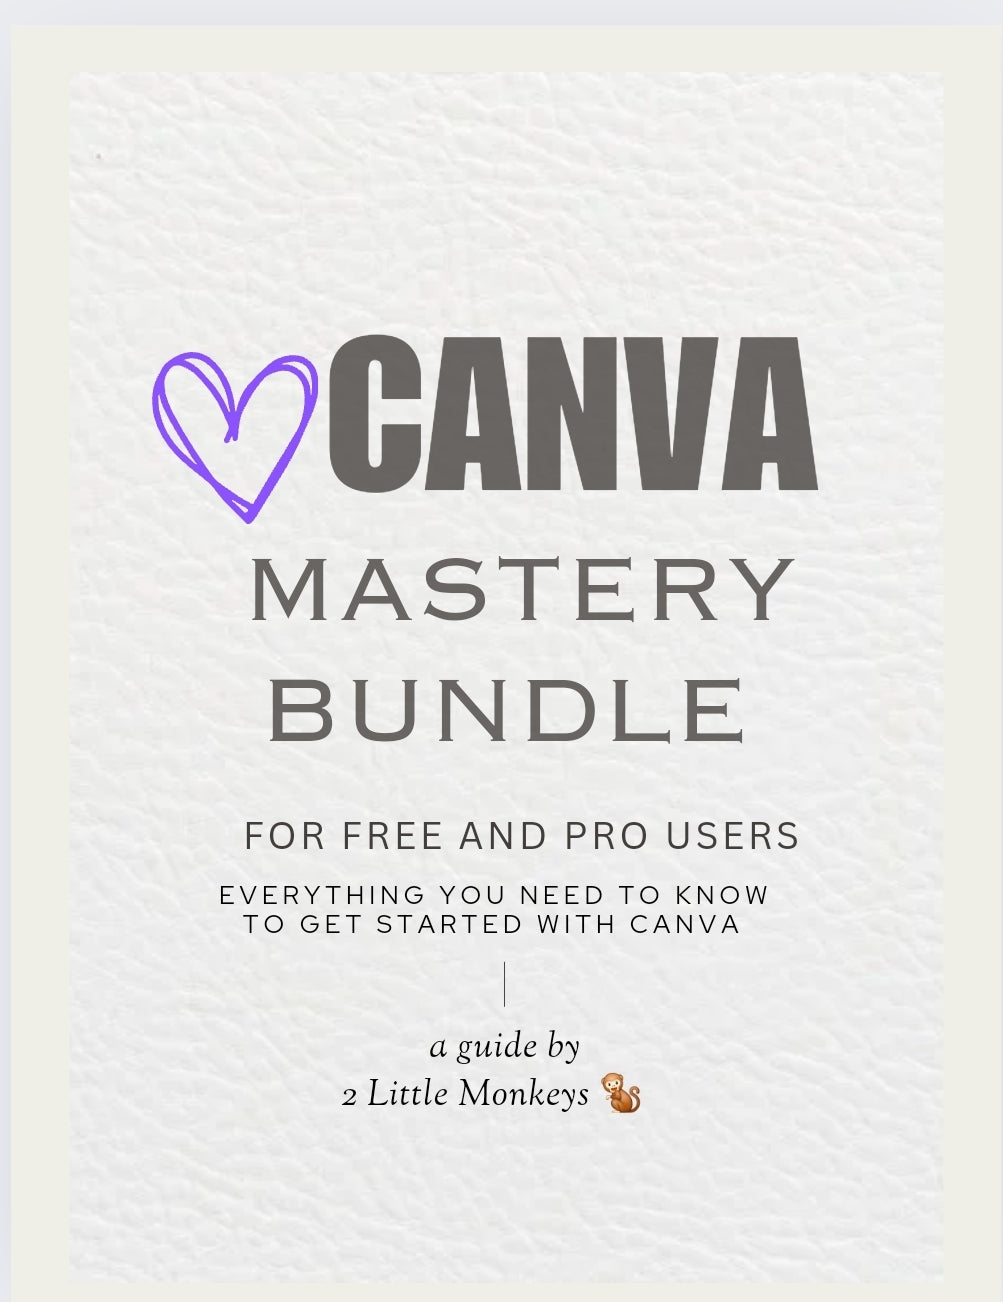 Canva Mastery bundle